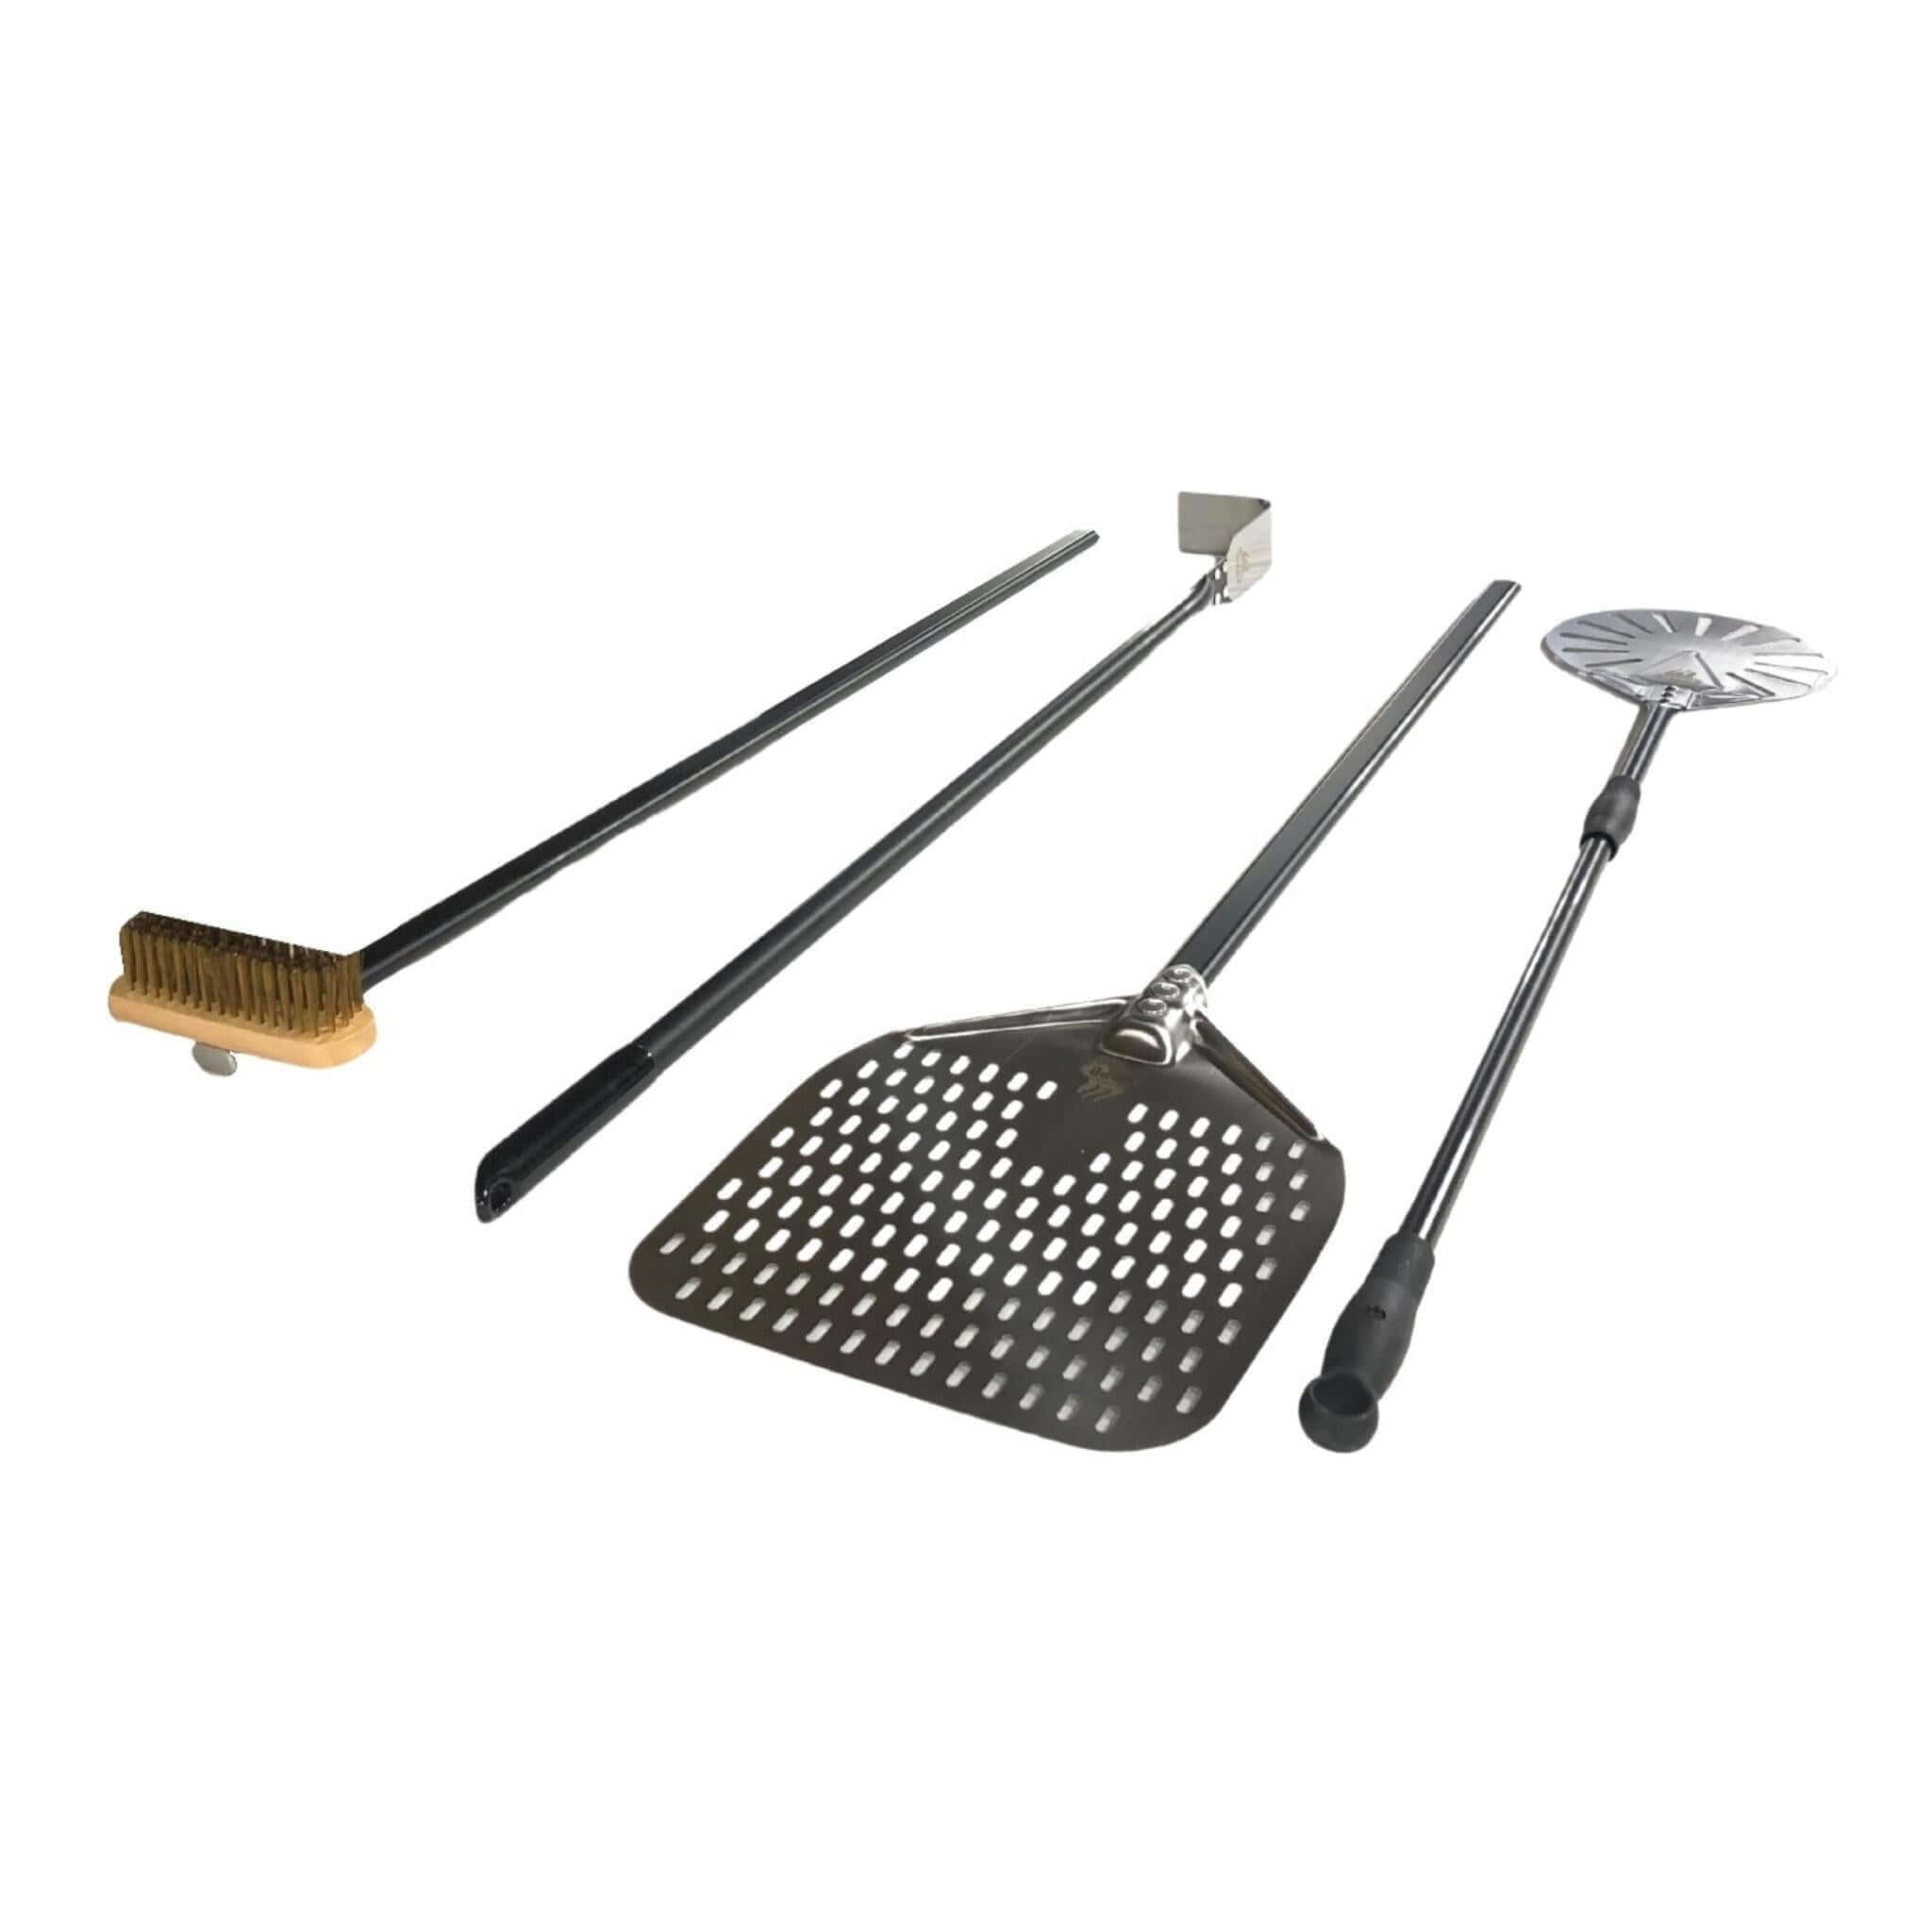 Pro 4 Piece, Aluminum handles, Wood Fired Pizza Oven Utensil Kit